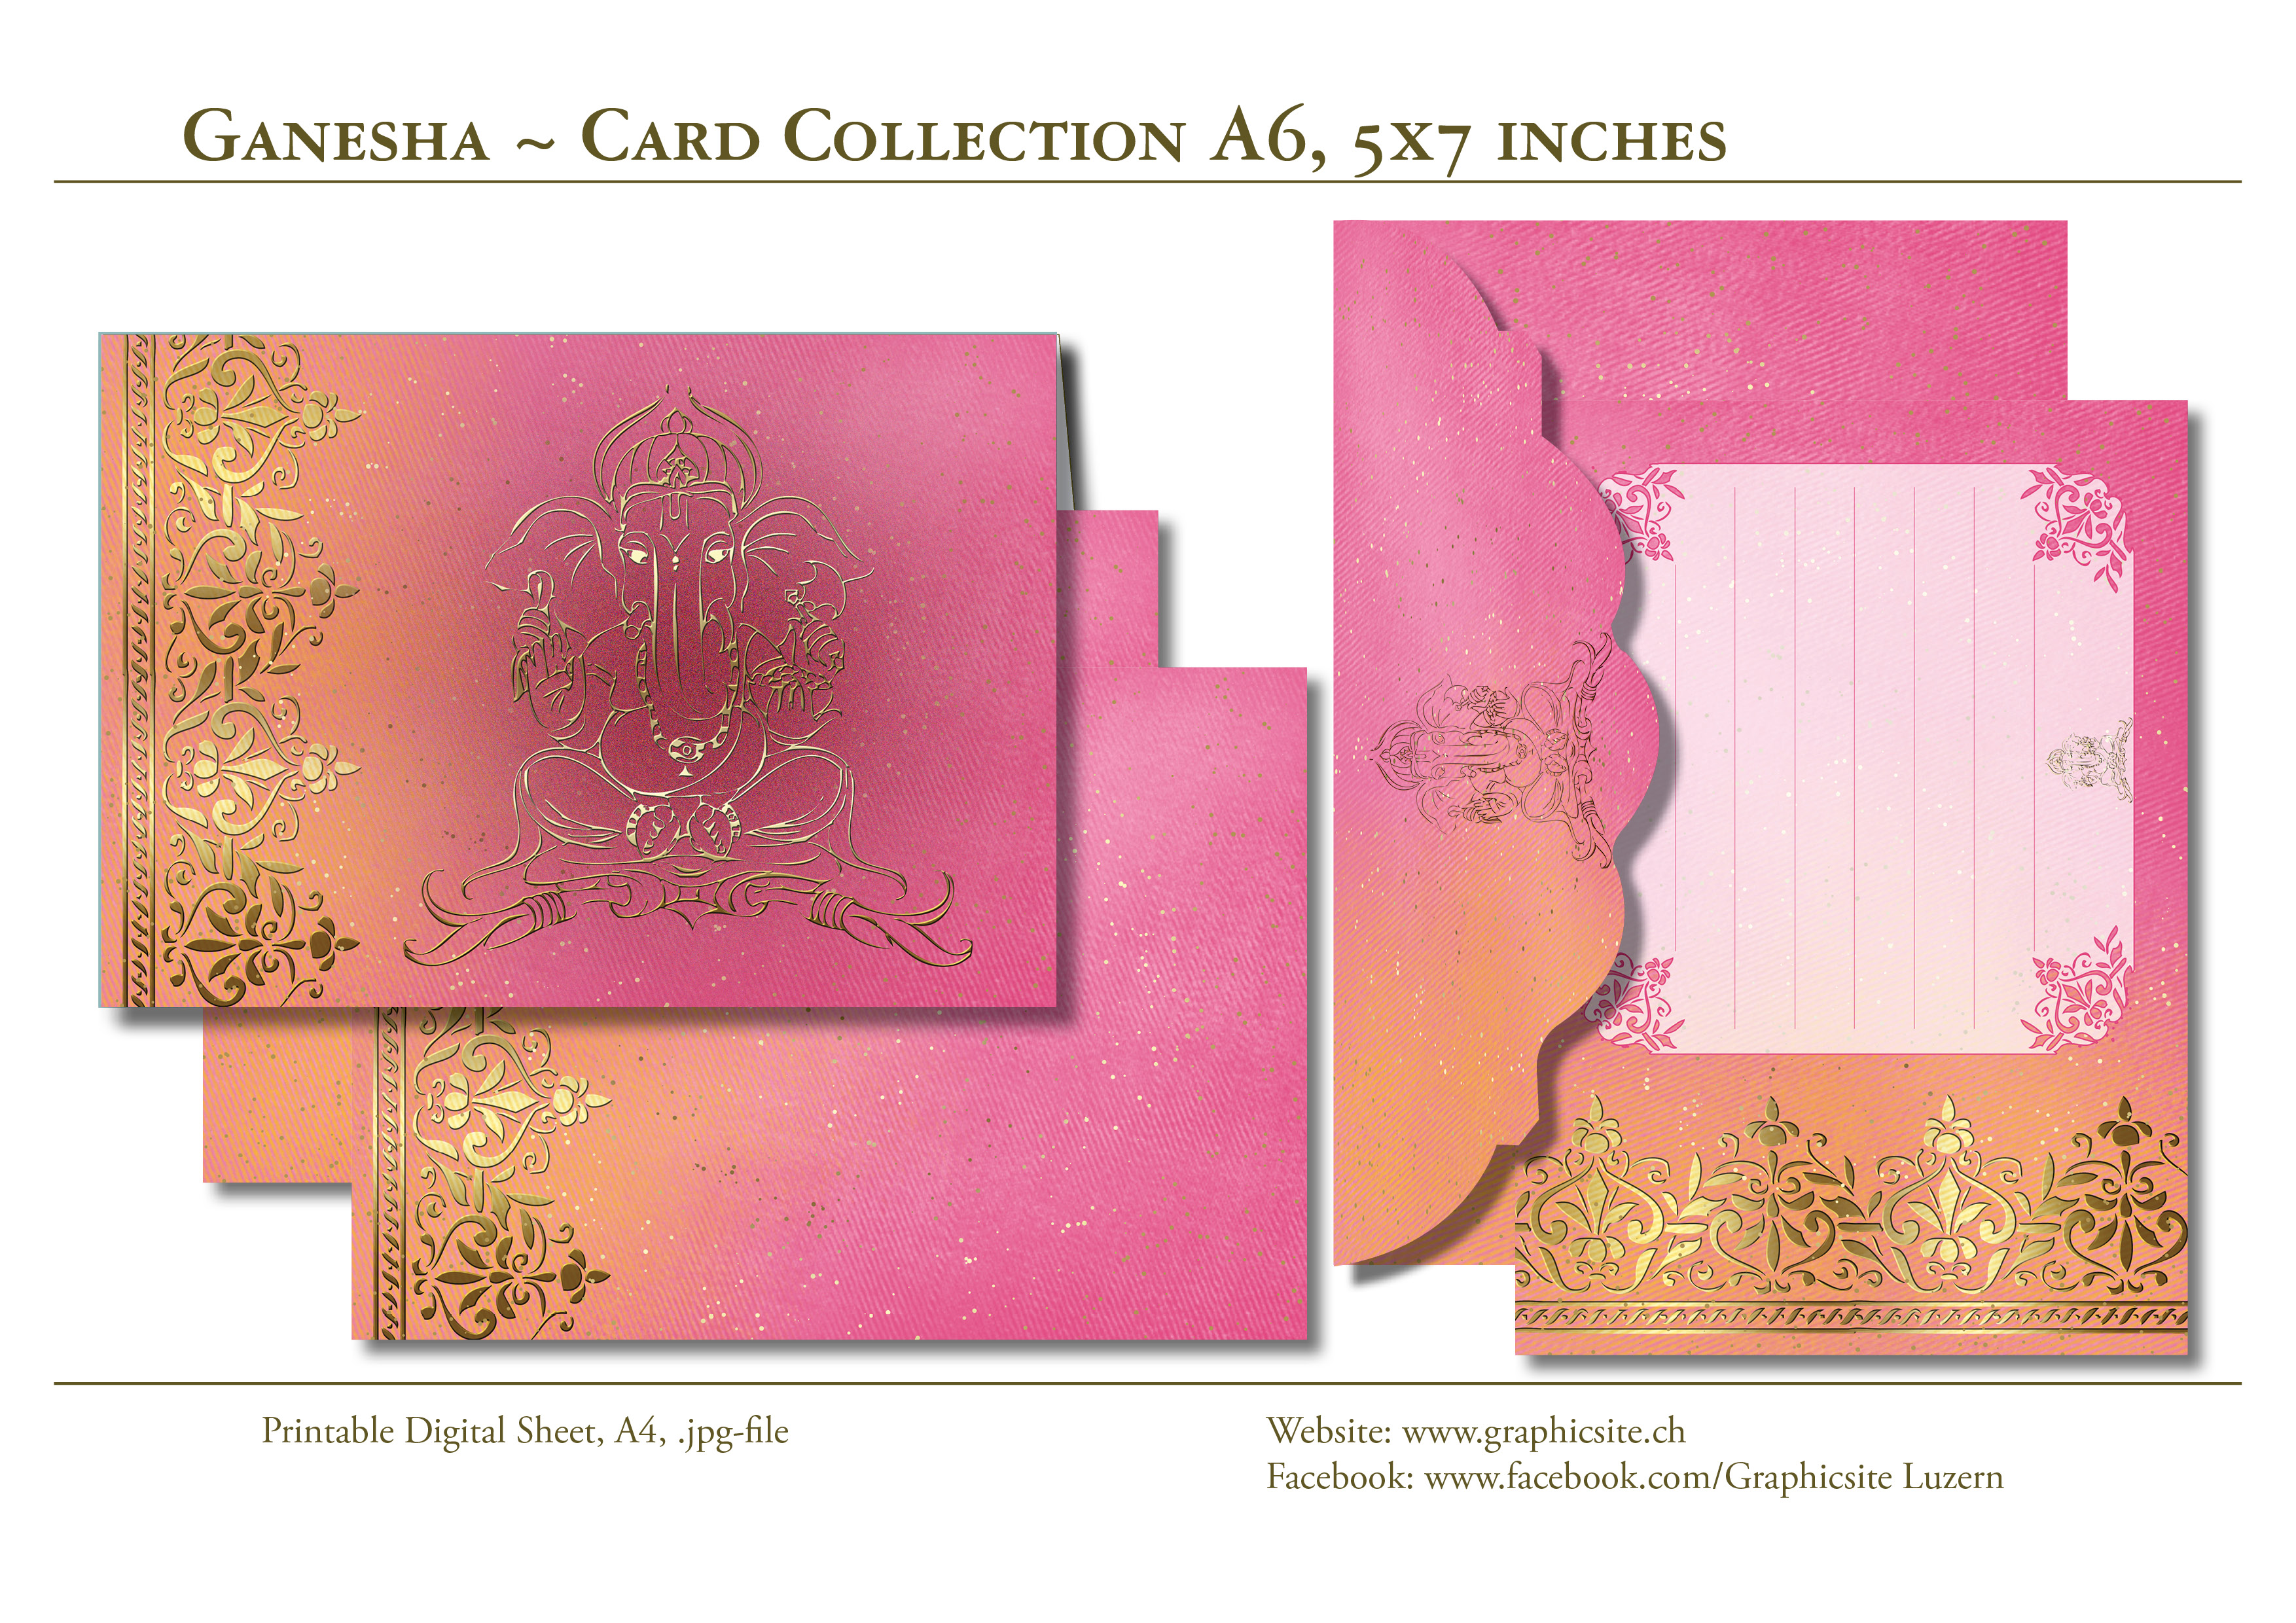 Printable Digital Sheets - DIN A Card Collection - Yoga, Meditation, Ganesha, India, Graphic Design, Luzern,